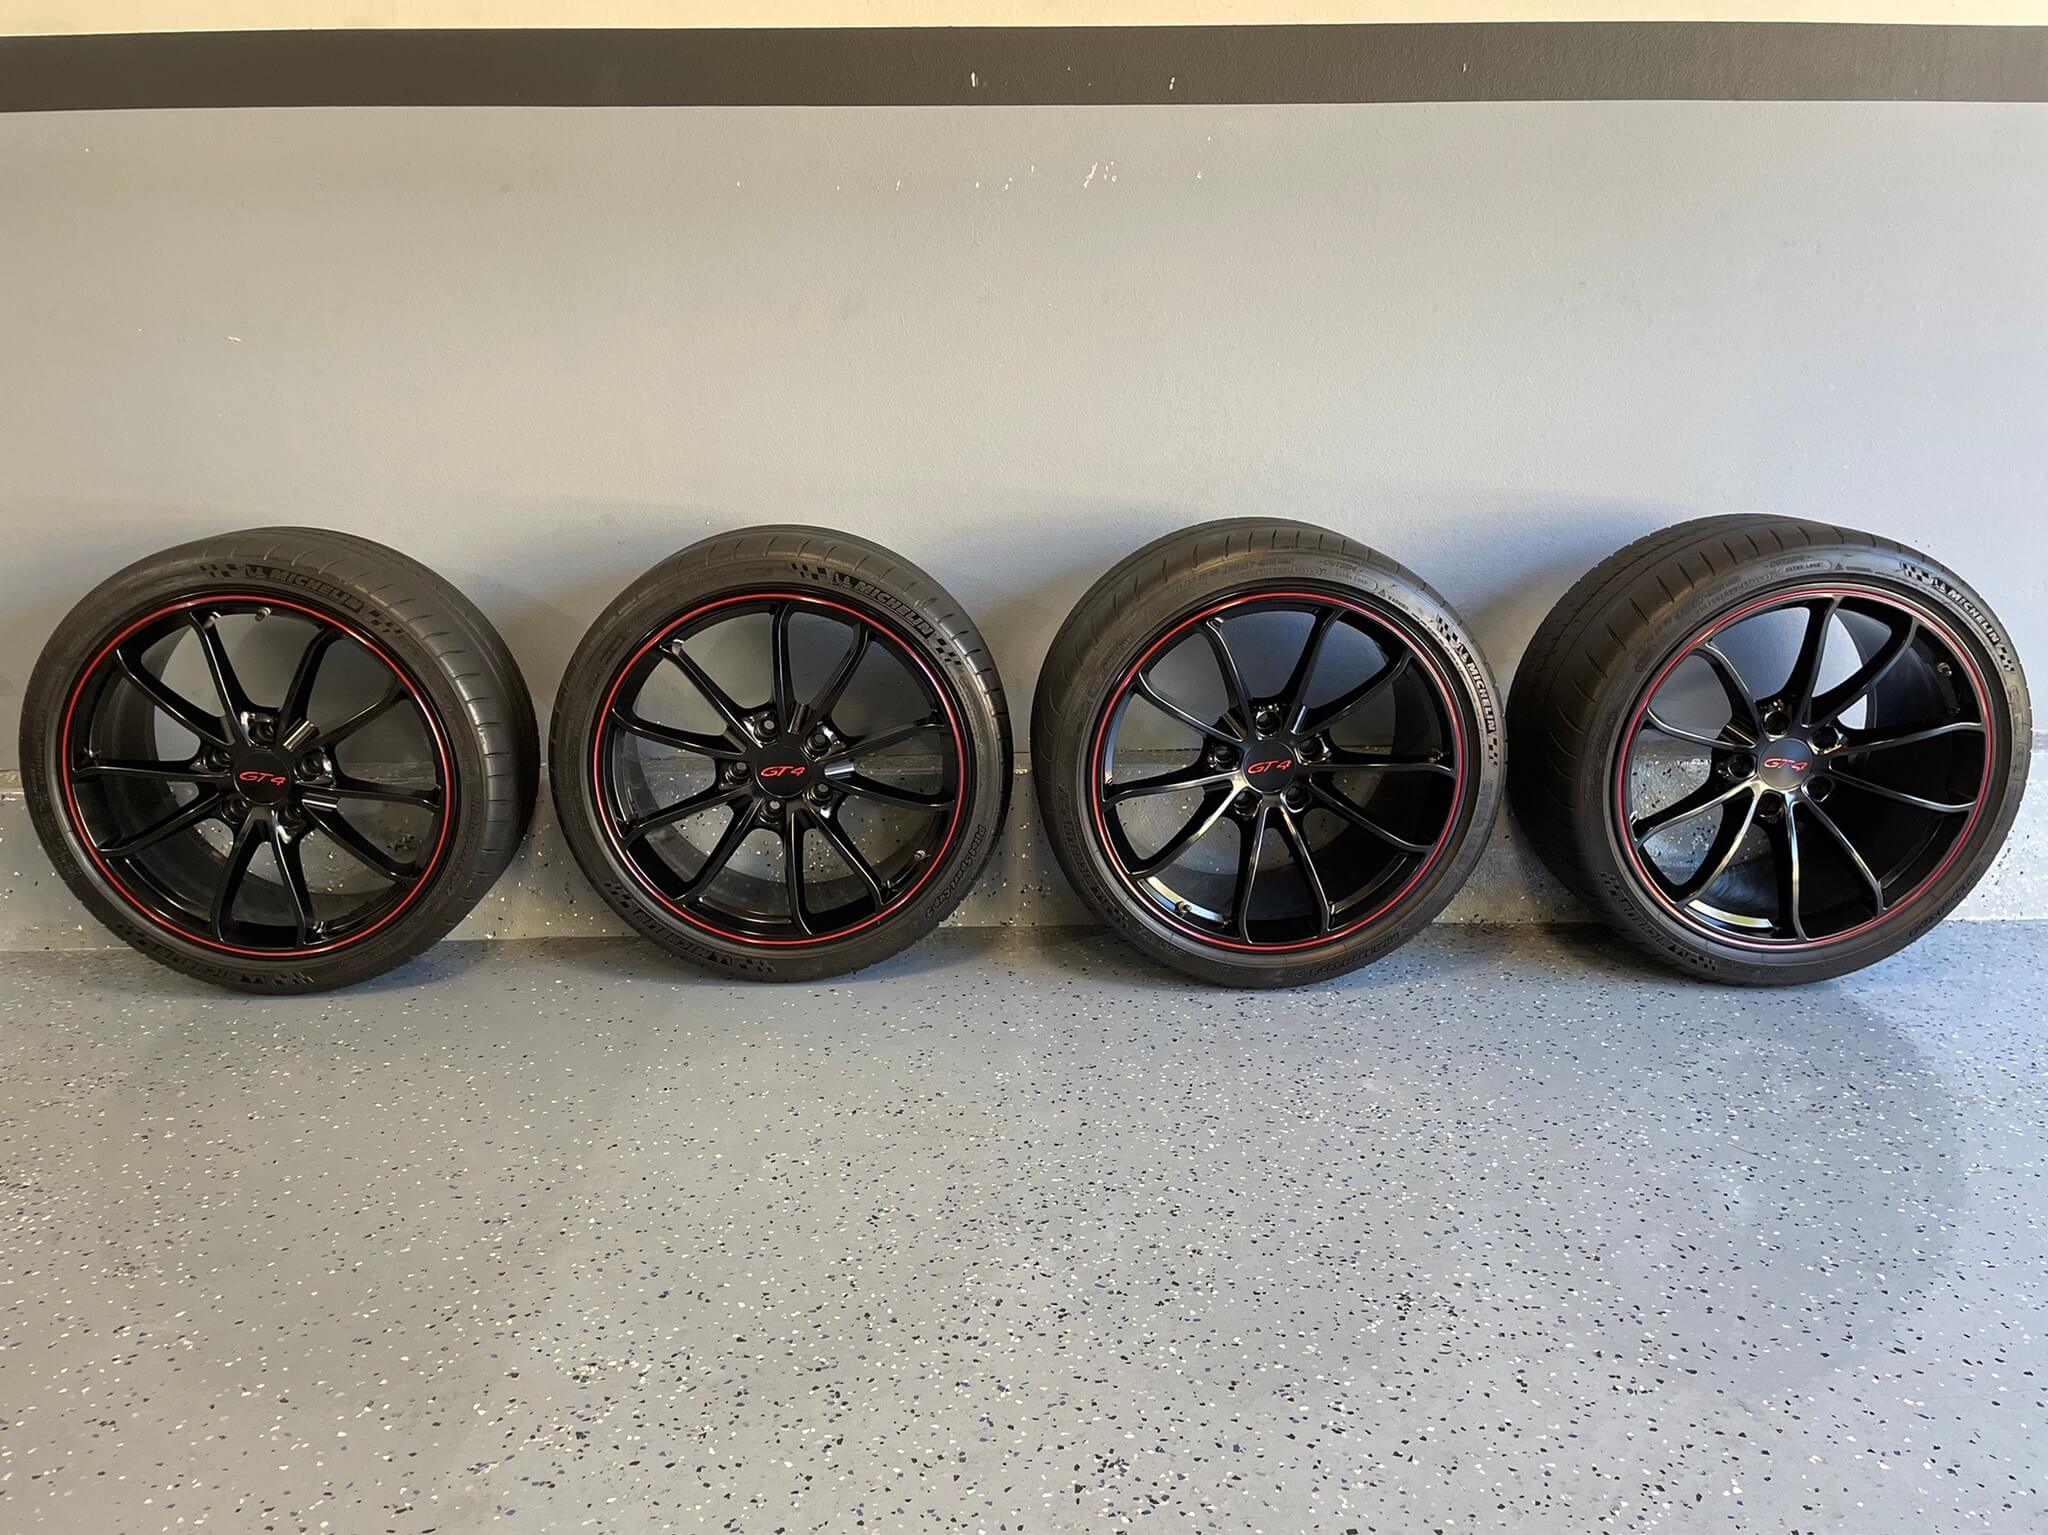 Porsche Cayman GT4 Wheels with Michelin Pilot Sport Cup 2 Tires